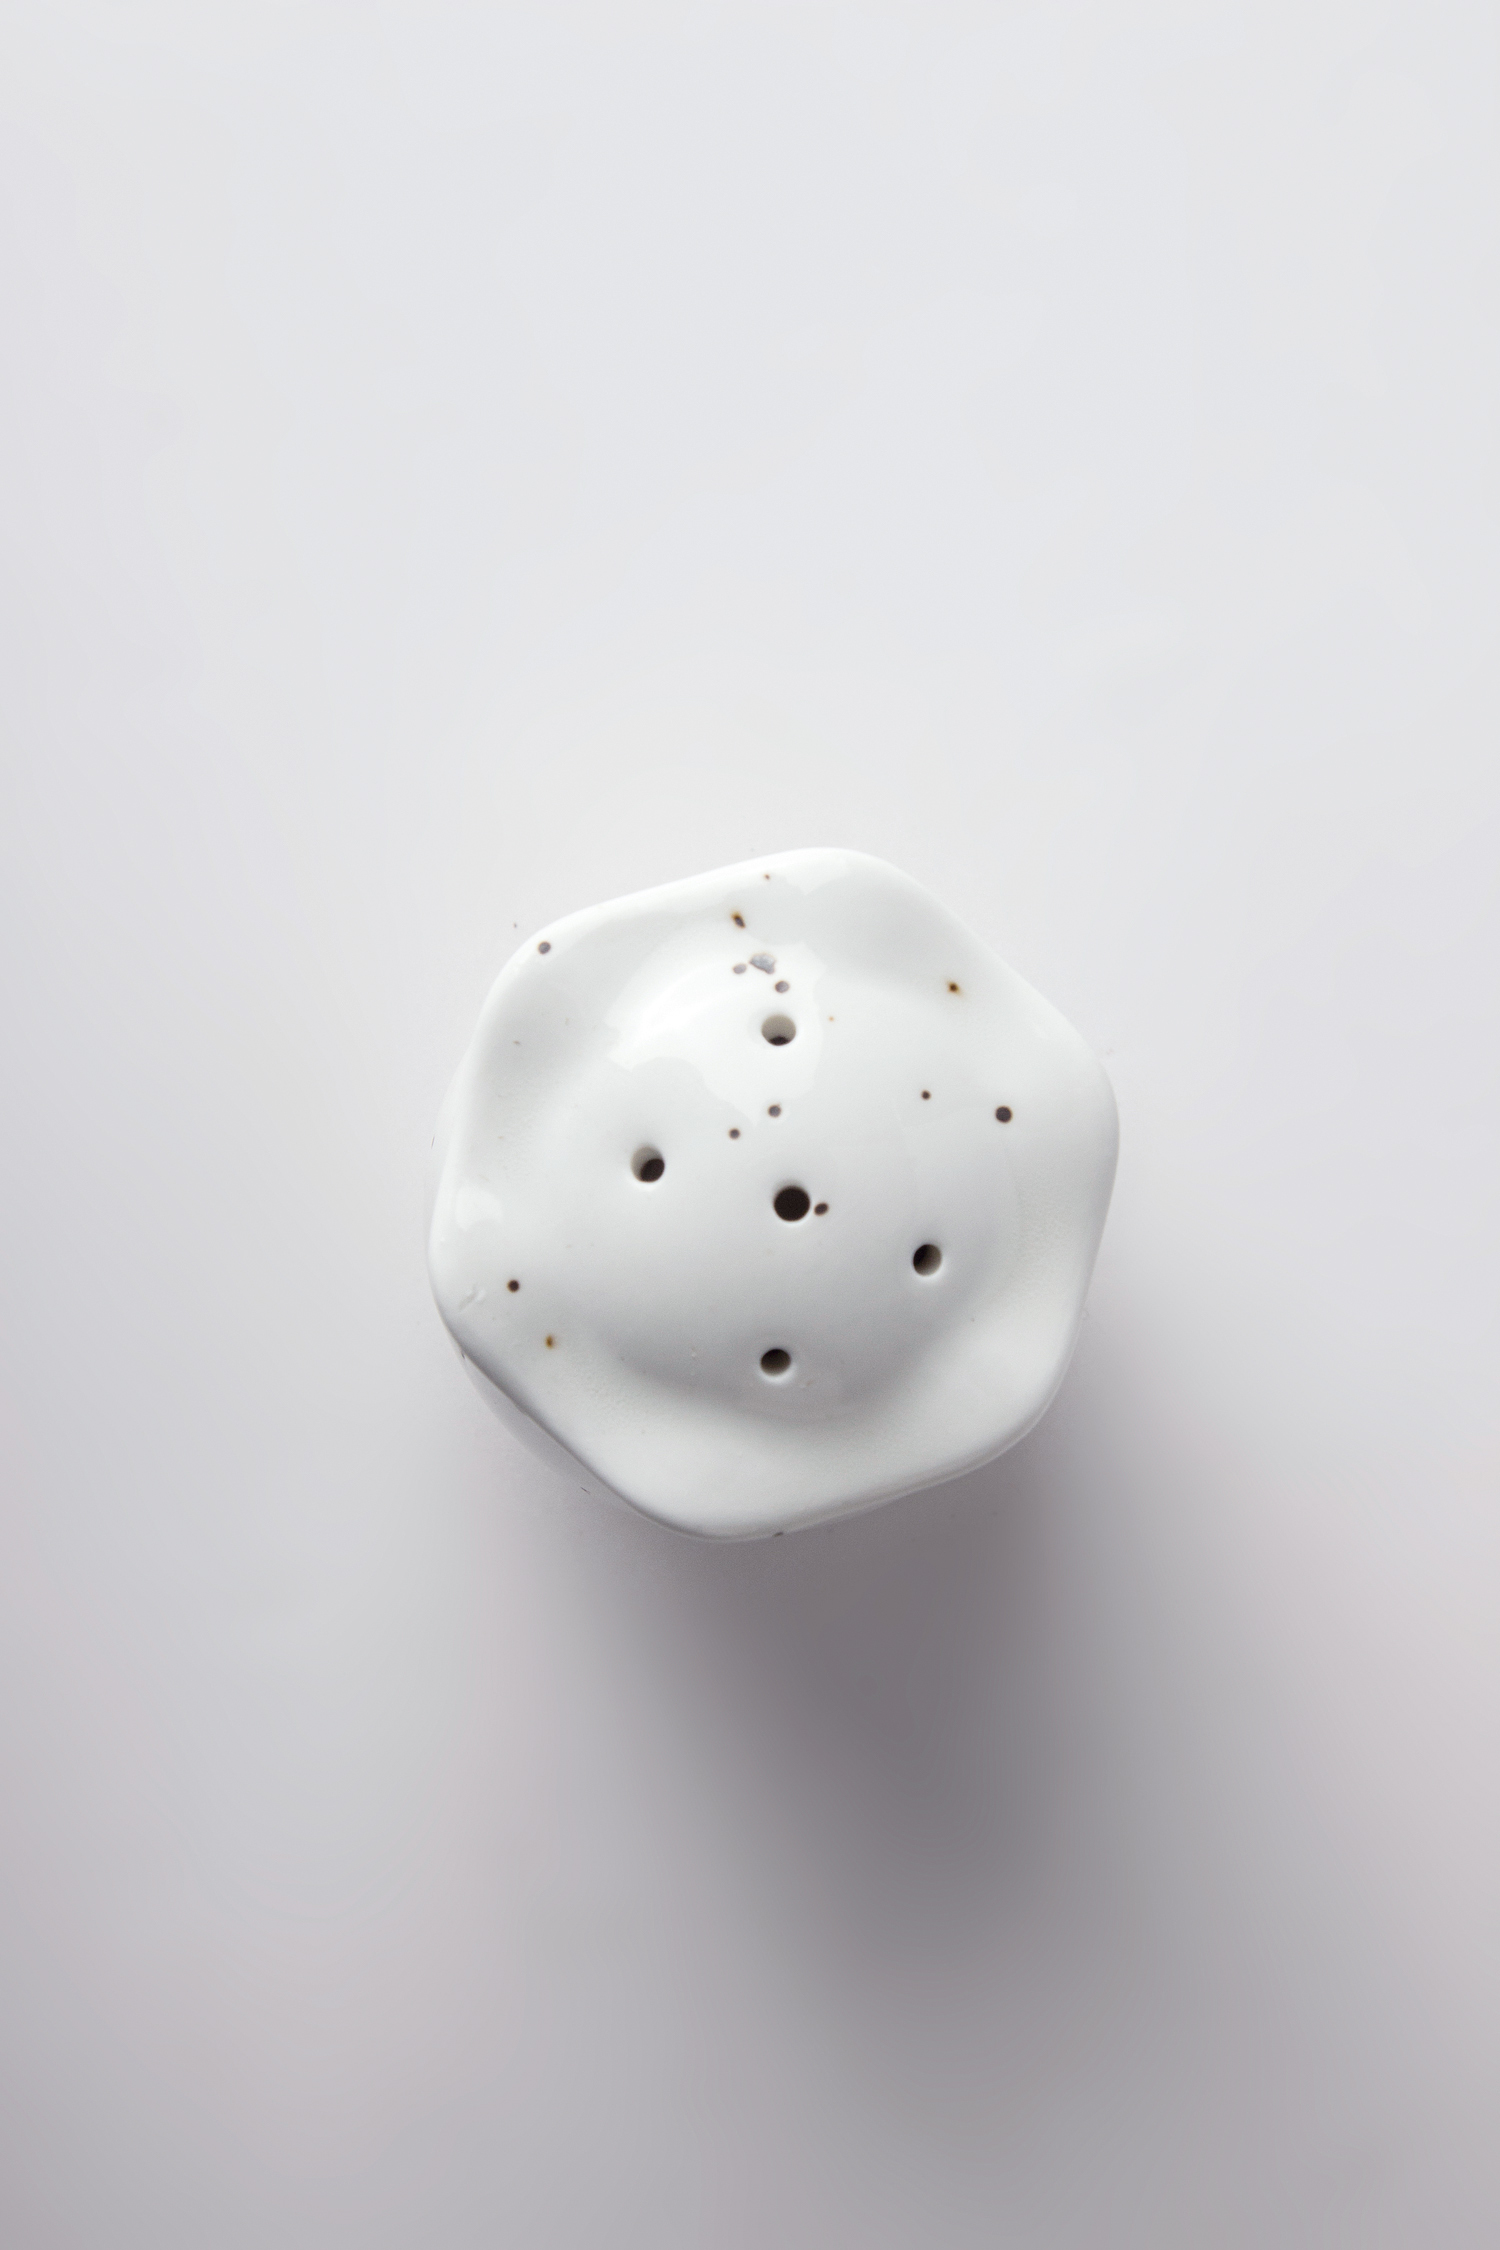 Glaze Porcelain Ceramics Salt And Pepper Shaker With Stopper Replacement For Restaurant Hotel